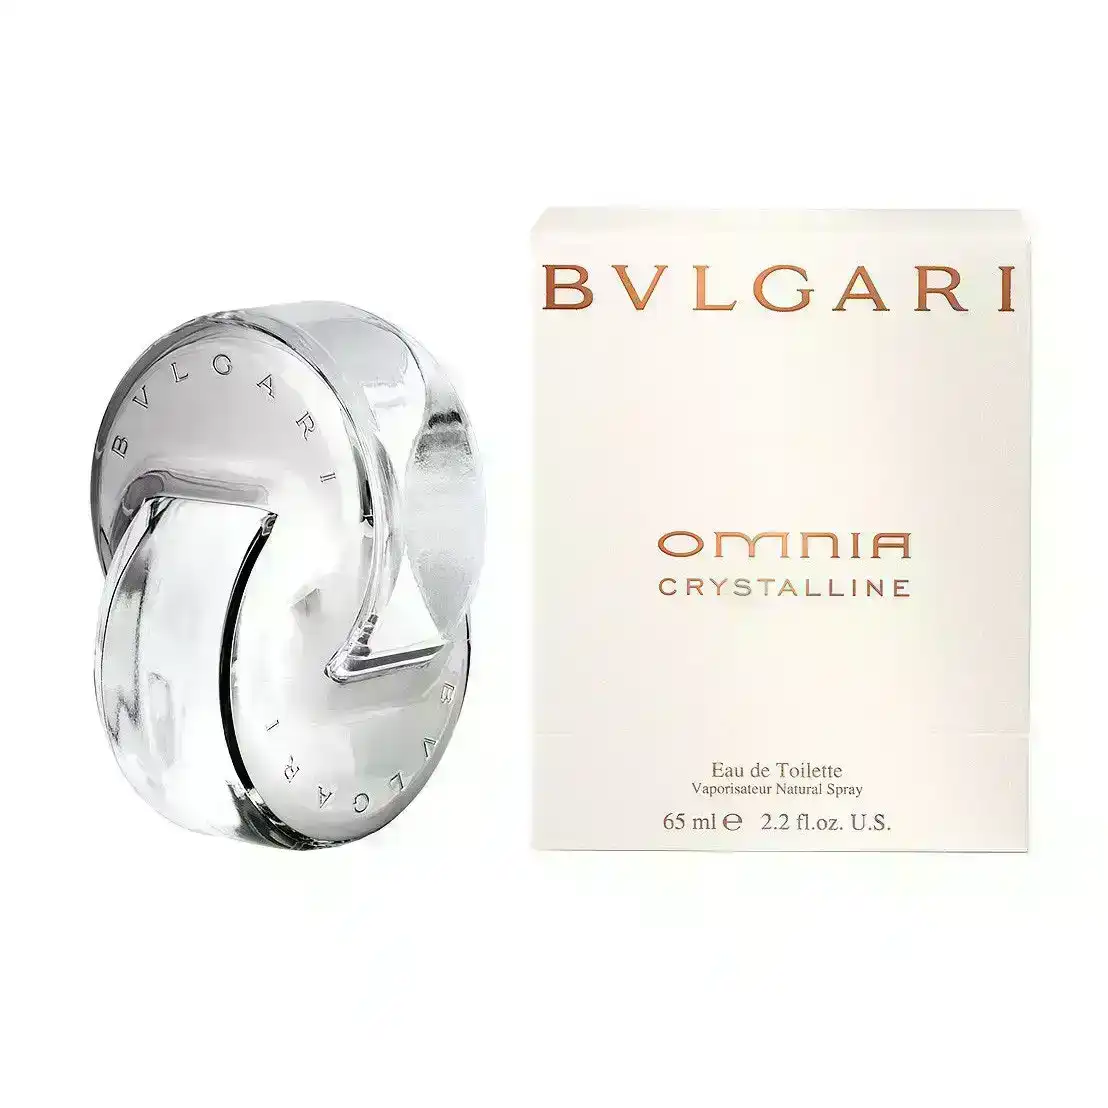 Bvlgari Omnia Crystalline 65ml EDT (Womens)